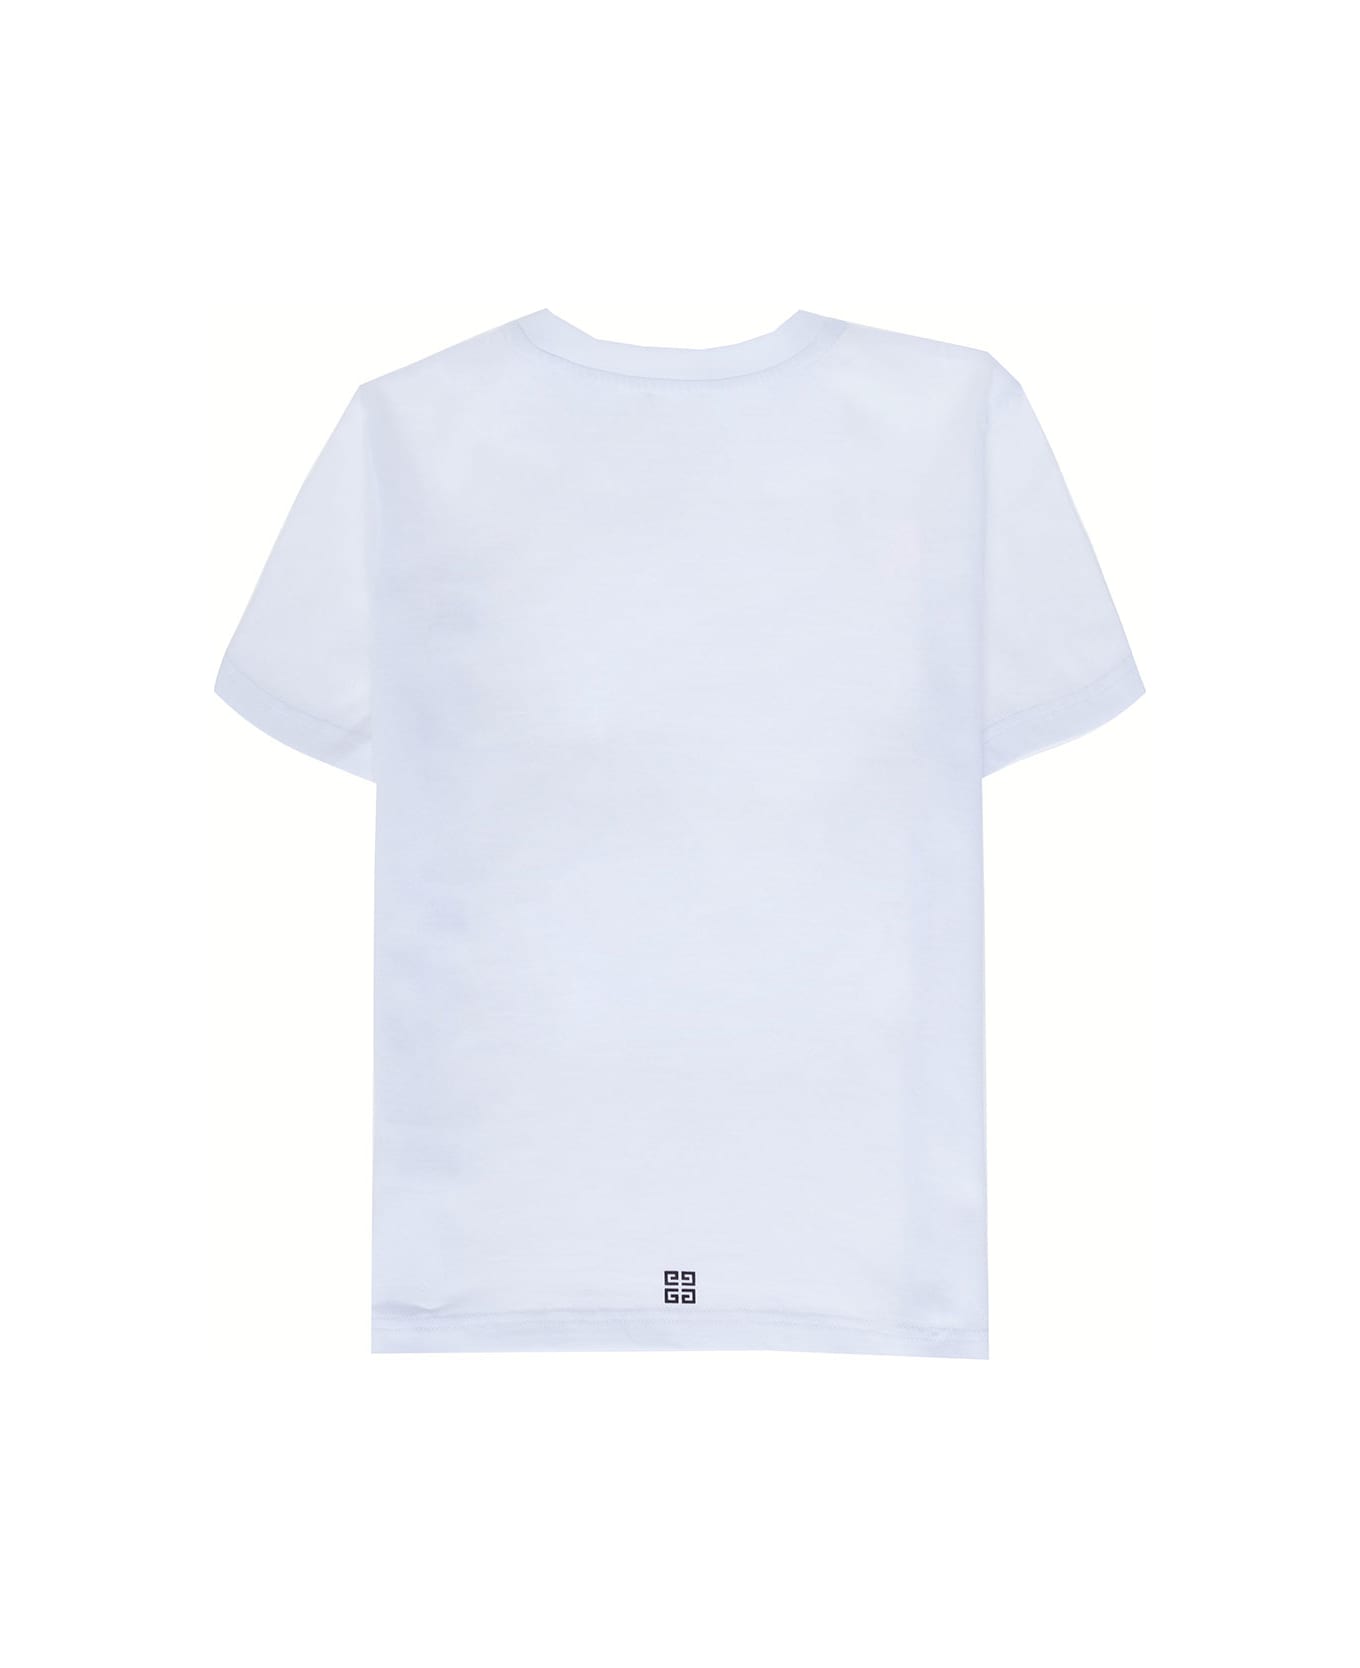 Givenchy Boy Cotton White T-shirt With Logo Print - White